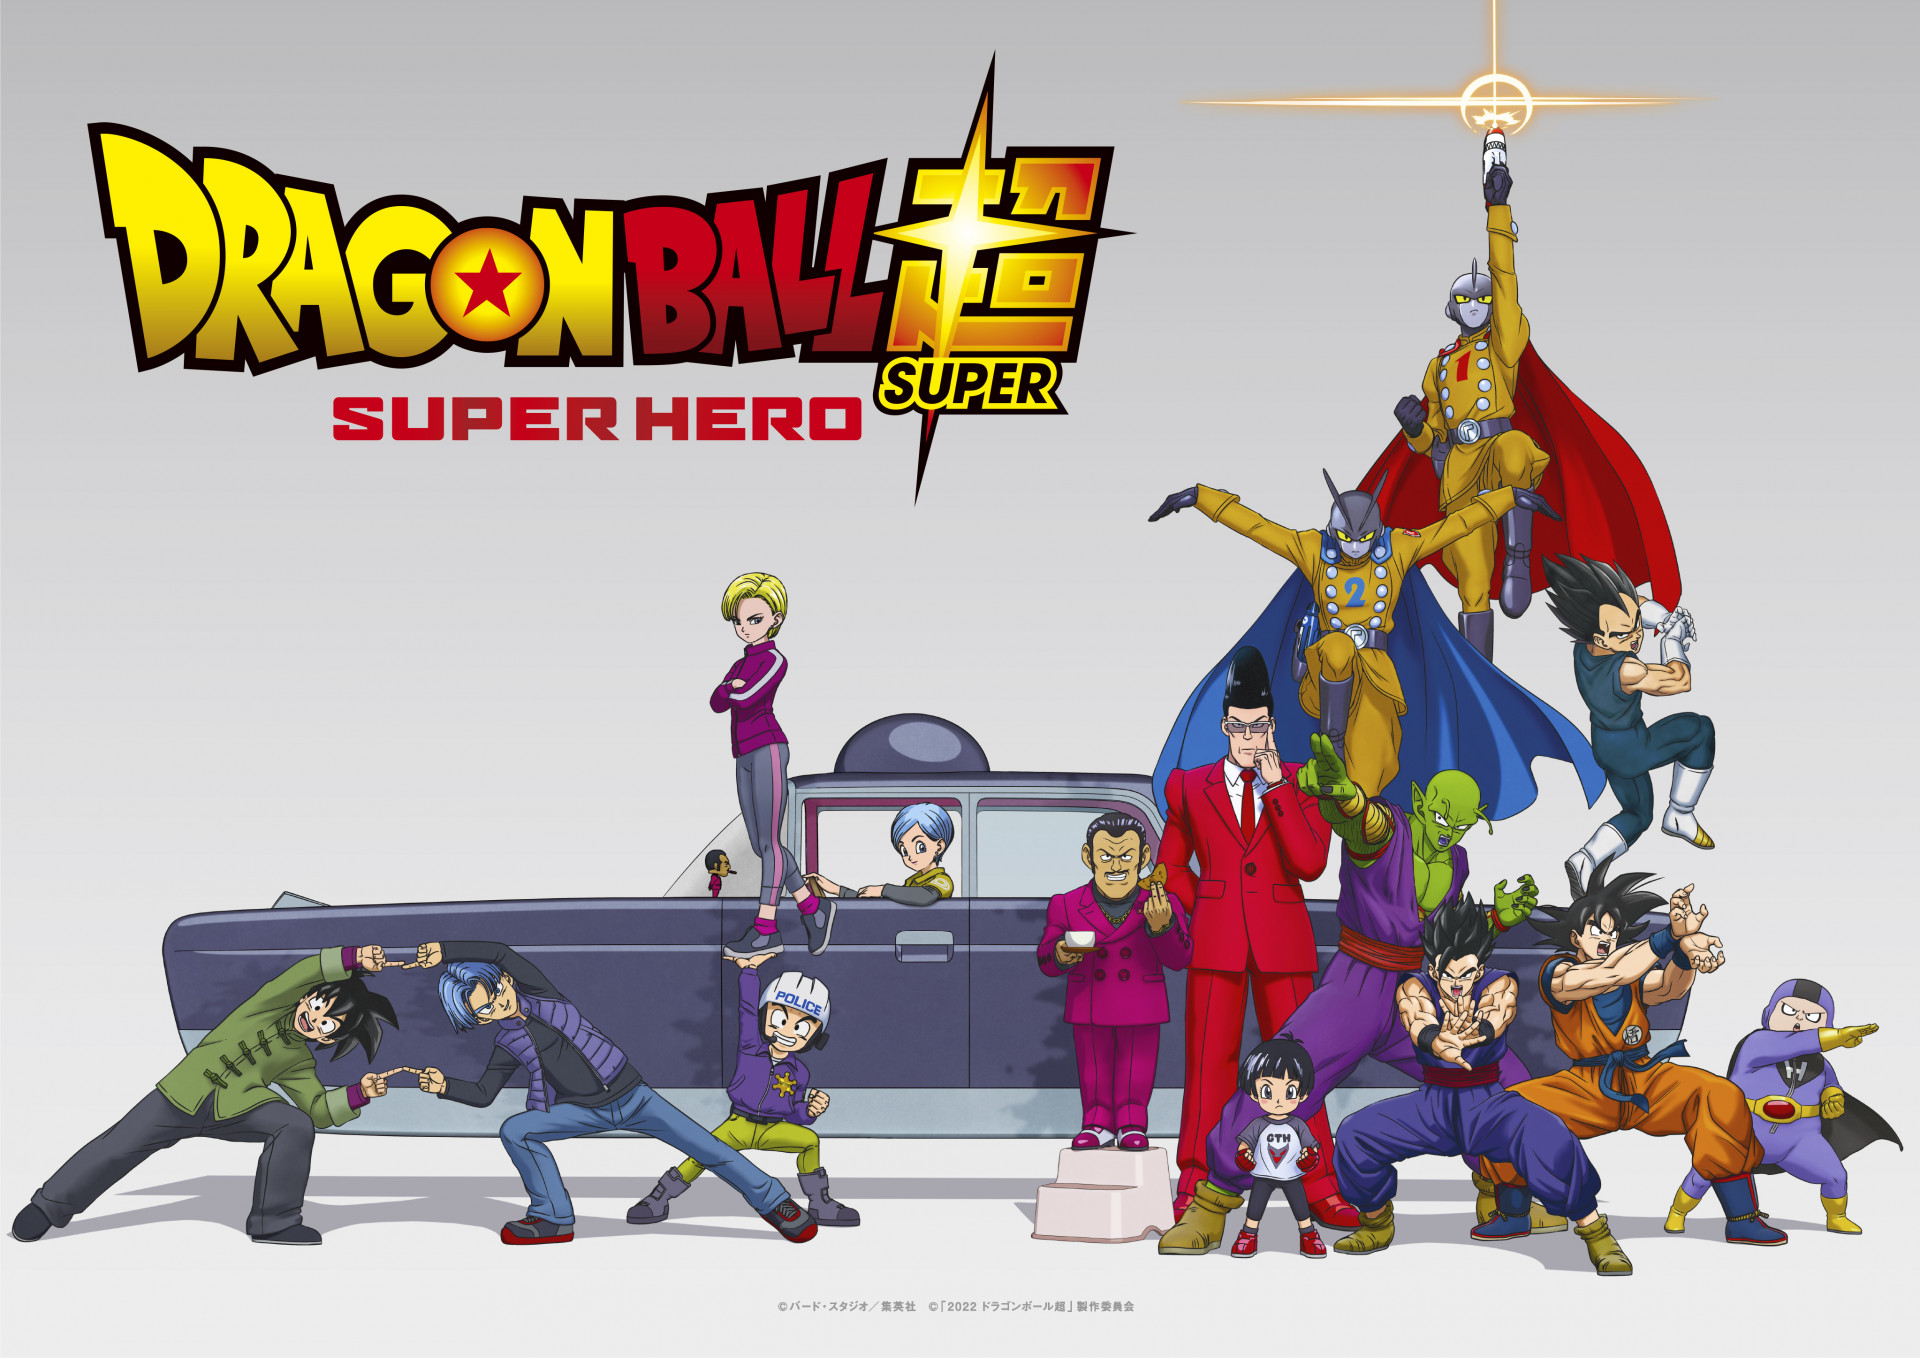 Super Uub Is The Next DLC Character Joining Dragon Ball Xenoverse 2 –  NintendoSoup